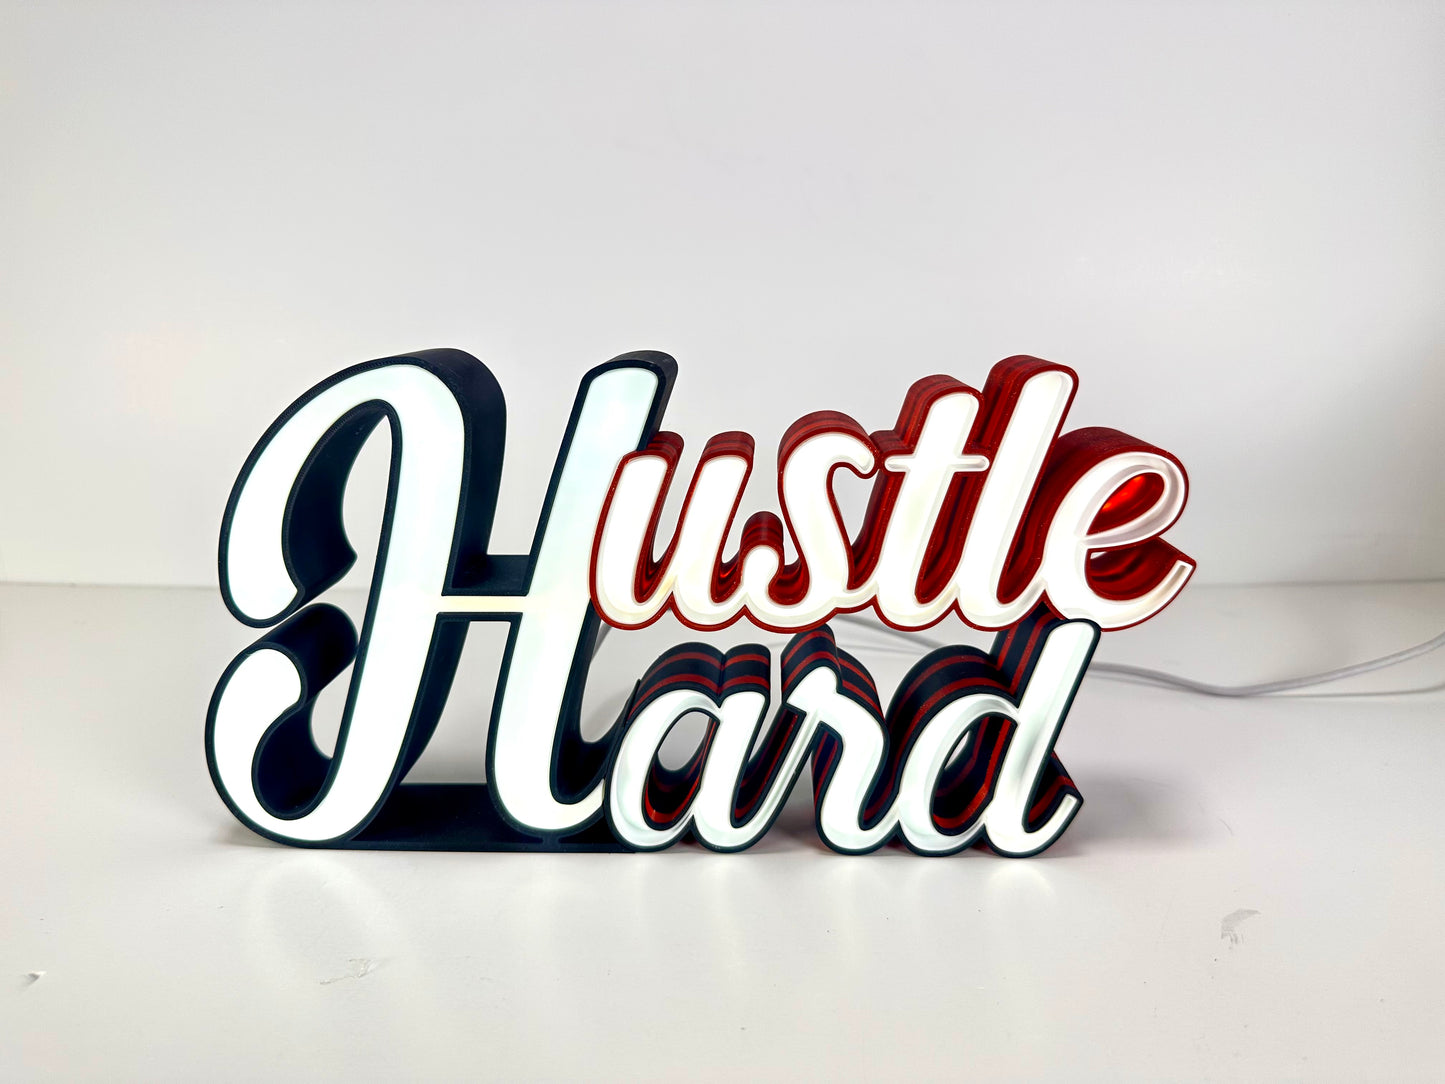 Hustle Hard LED Sign - LED Light Décor for Home and Office